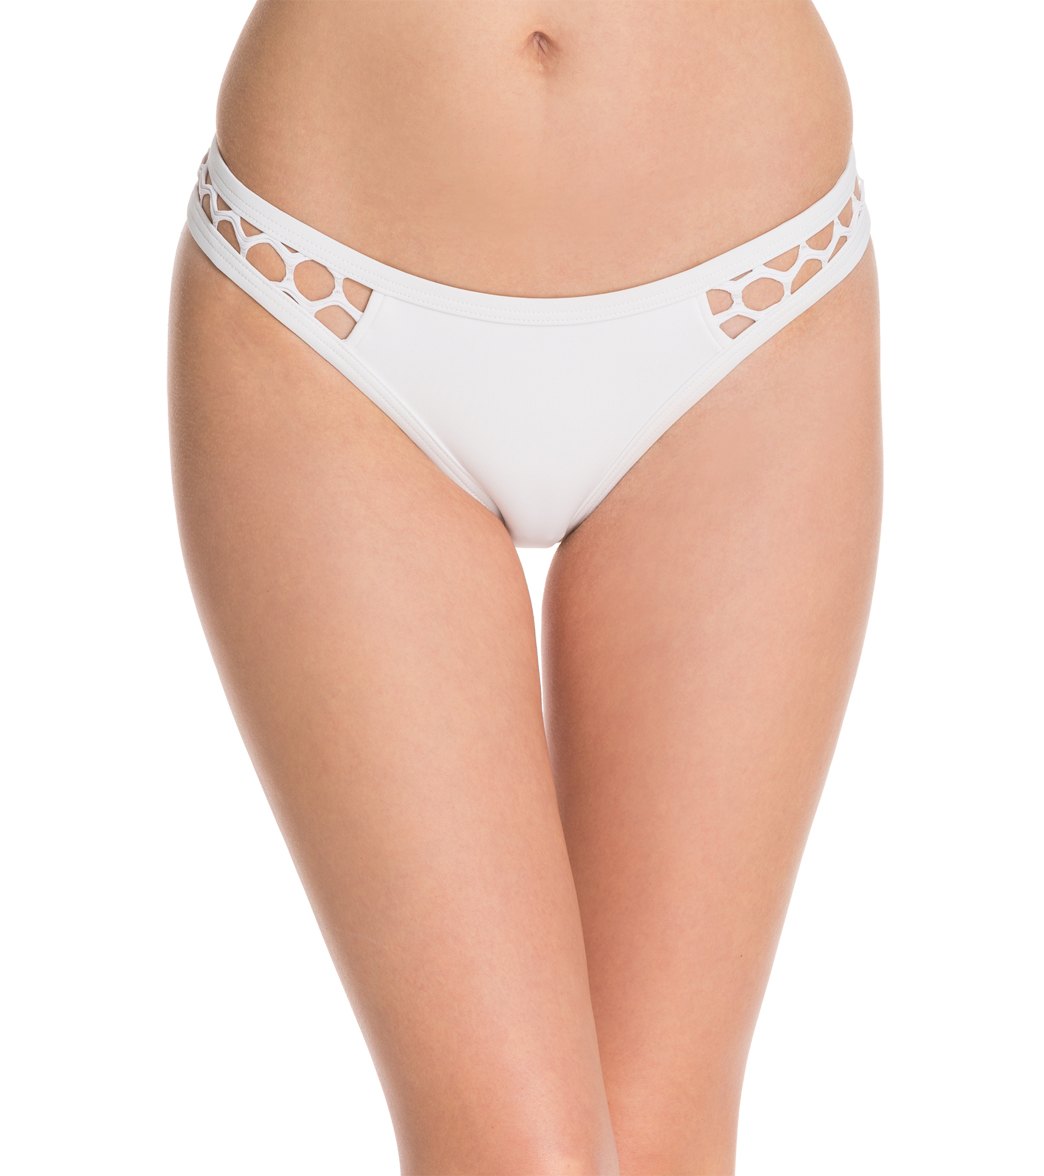 Seafolly Mesh About High Cut Brazilian Bikini Bottom - White 10 - Swimoutlet.com